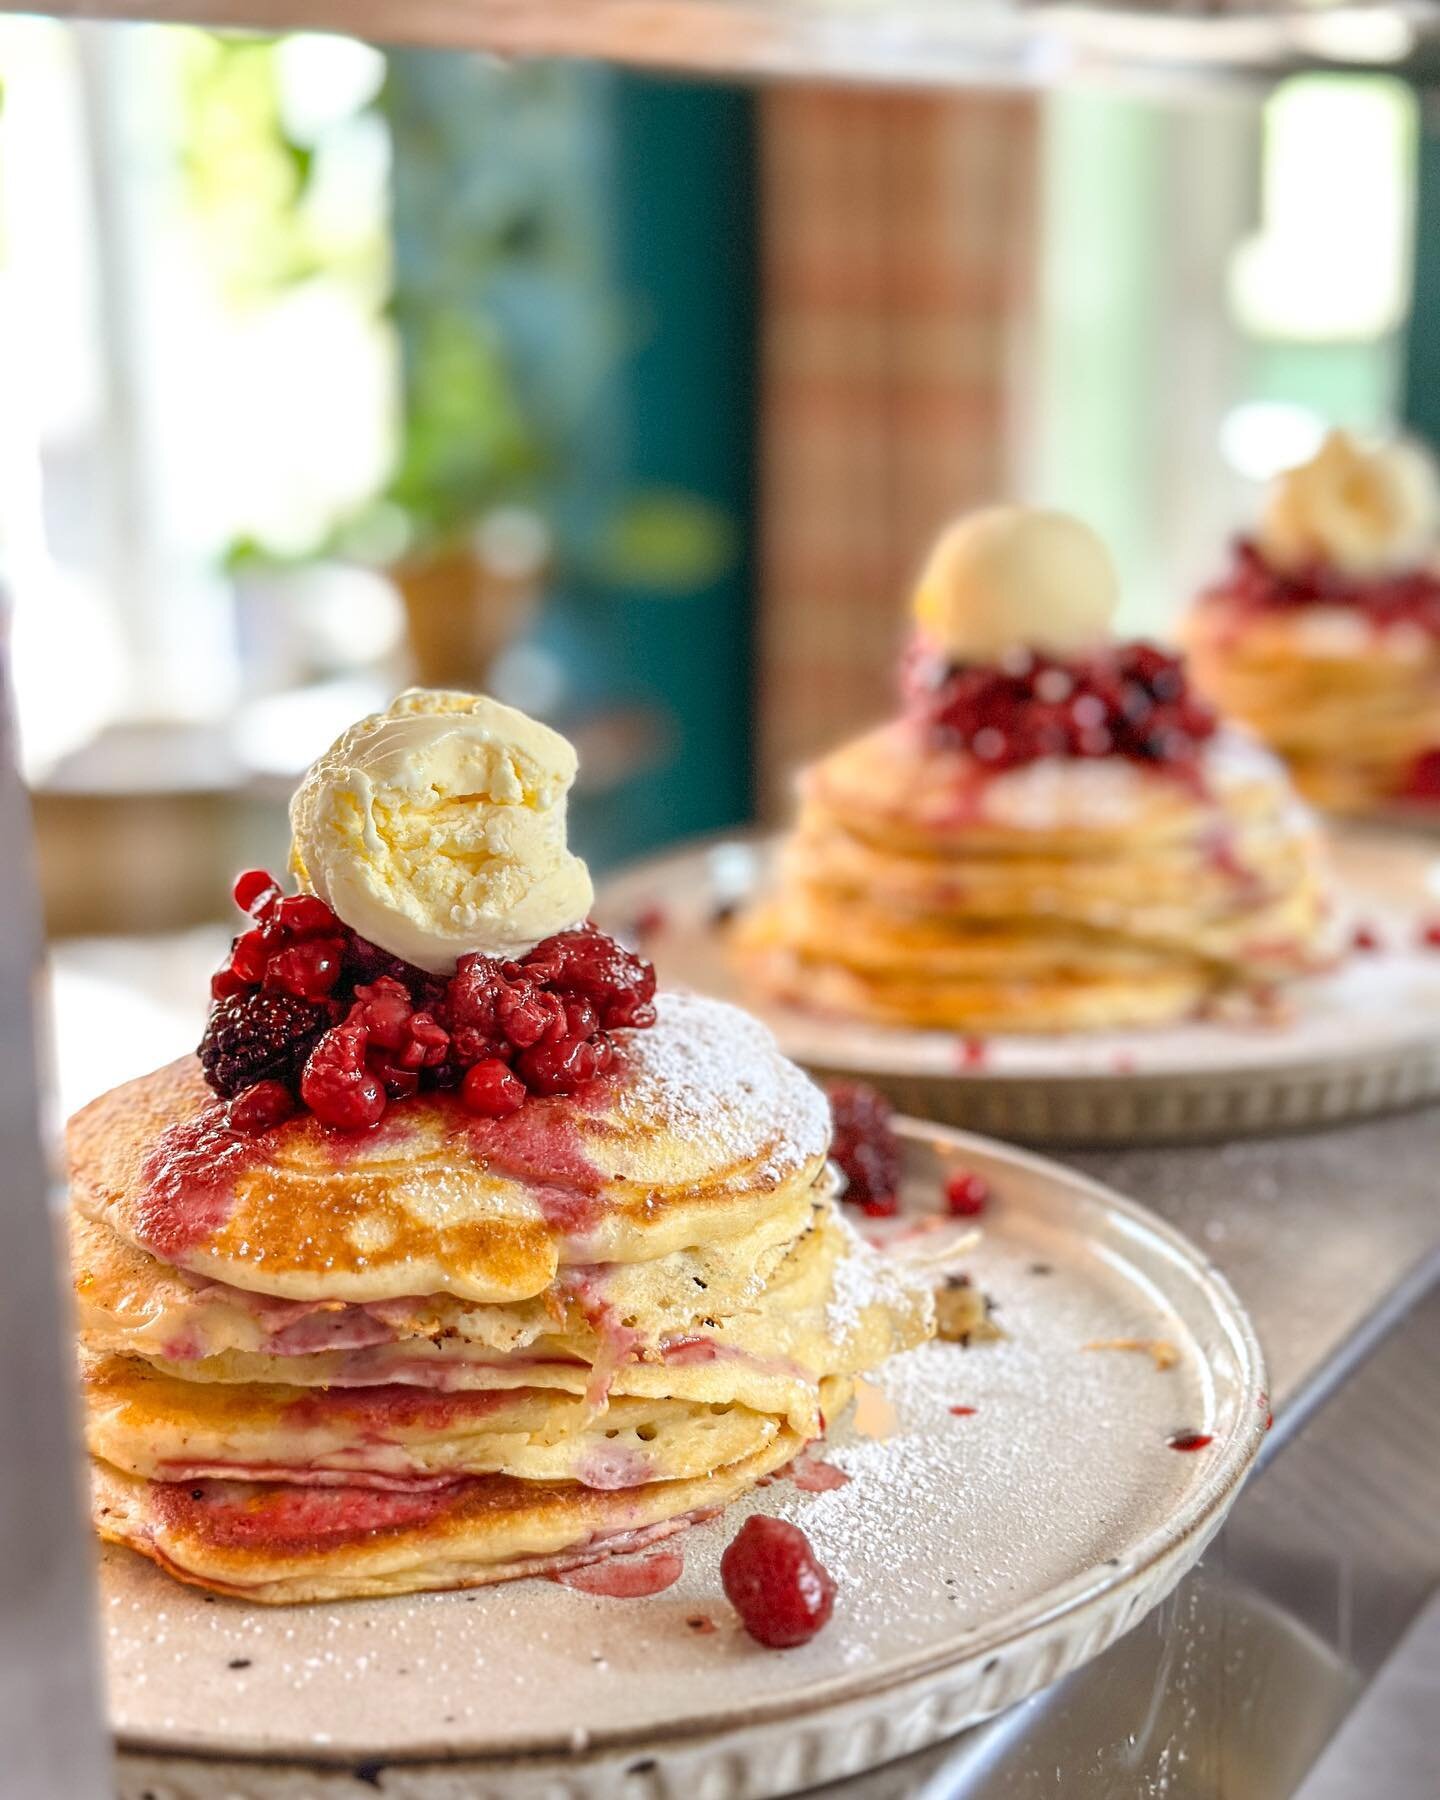 Time for pancakes 🥞❤️!

 #michelinguide @visitwalesbiz @visitwales #comfortfood #fooddiary #gastropub #visitwales #ukfood #pubgrub #WalesOnline #madeinwales #barlounge #craftbeer #foodismuk @foodismuk #brunch #pancakes #breakfast